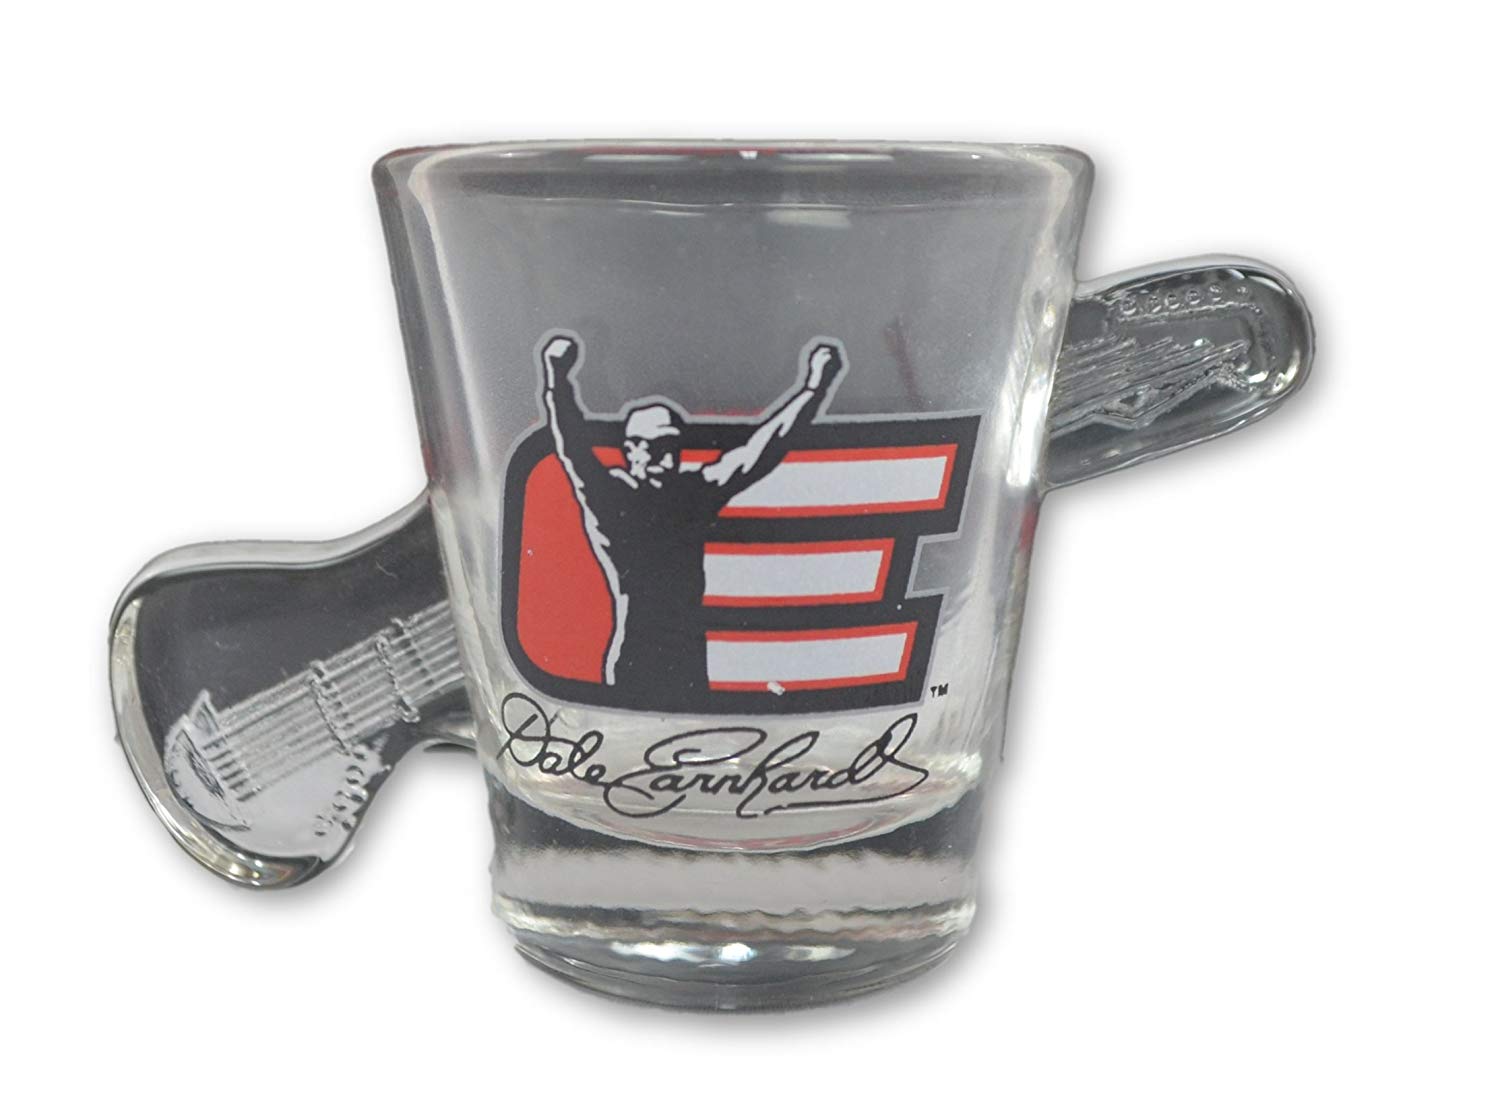 NASCAR Fan Shop 2-Pack 2 oz. Shot Glasses - Great for Home or Tailgate